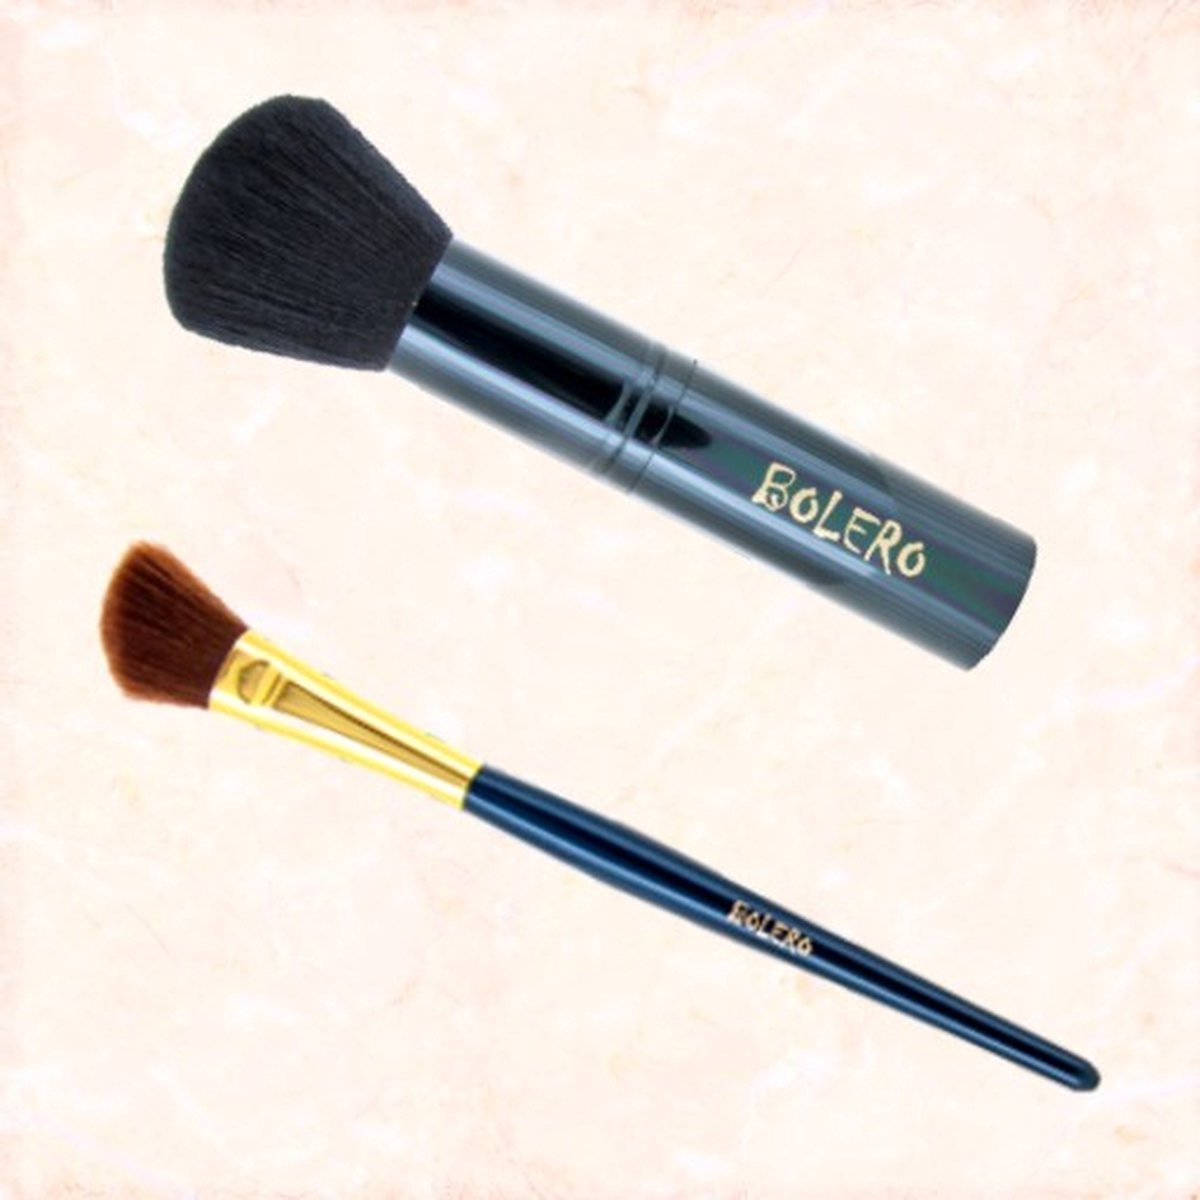 Bolero cosmetics - Make-up kwastenset - Kwasten - Set - Highlighter en Bronzing kwast